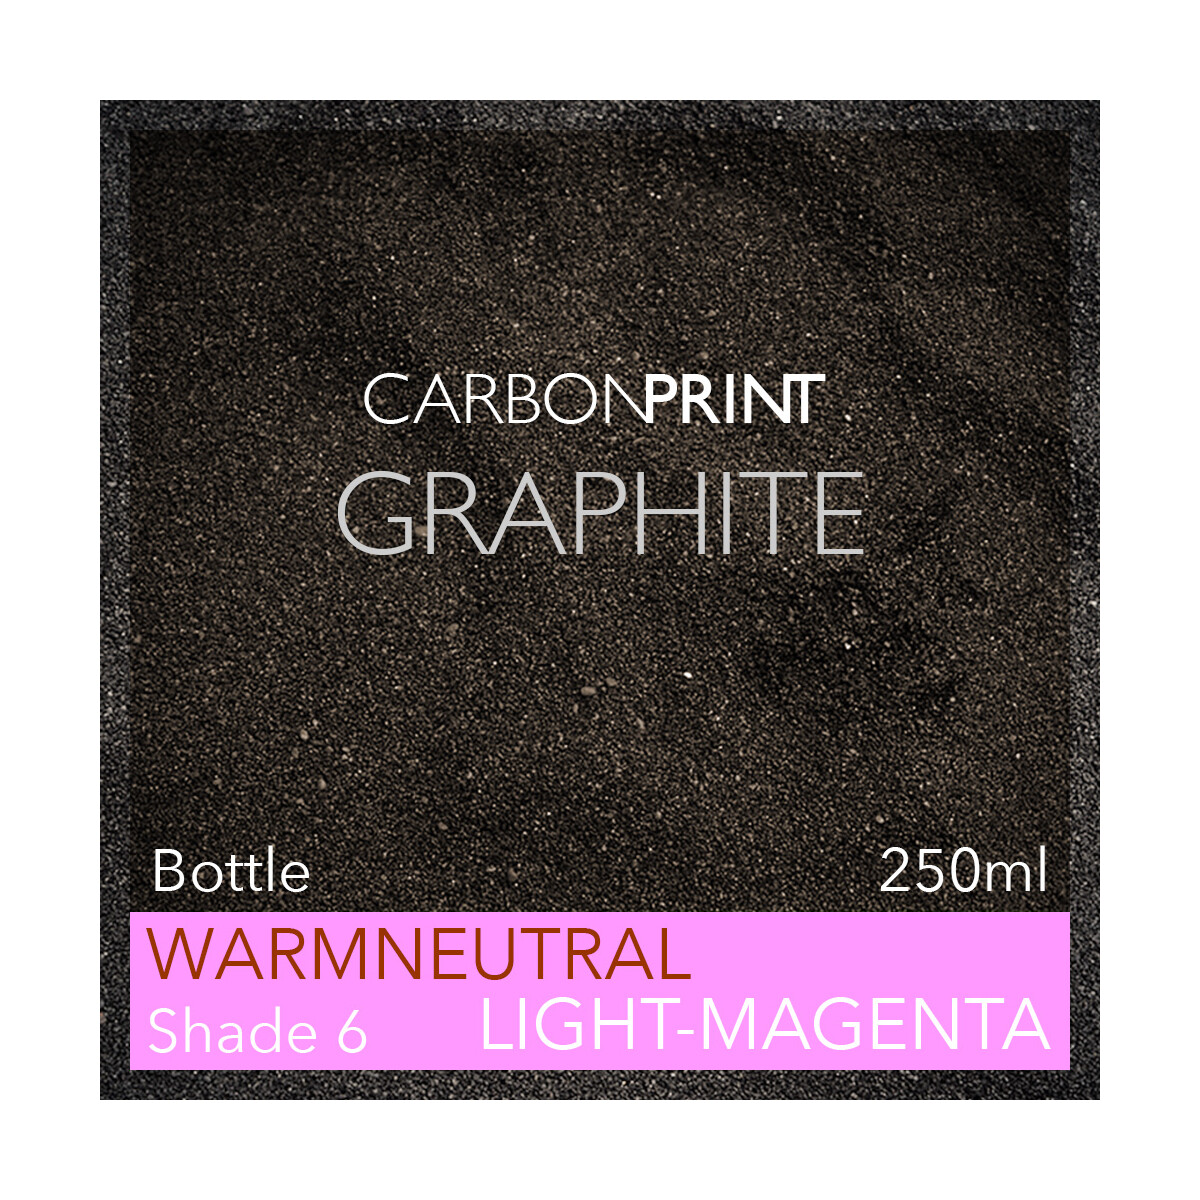 Carbonprint Graphite Shade6 Channel LM Warmneutral 250ml